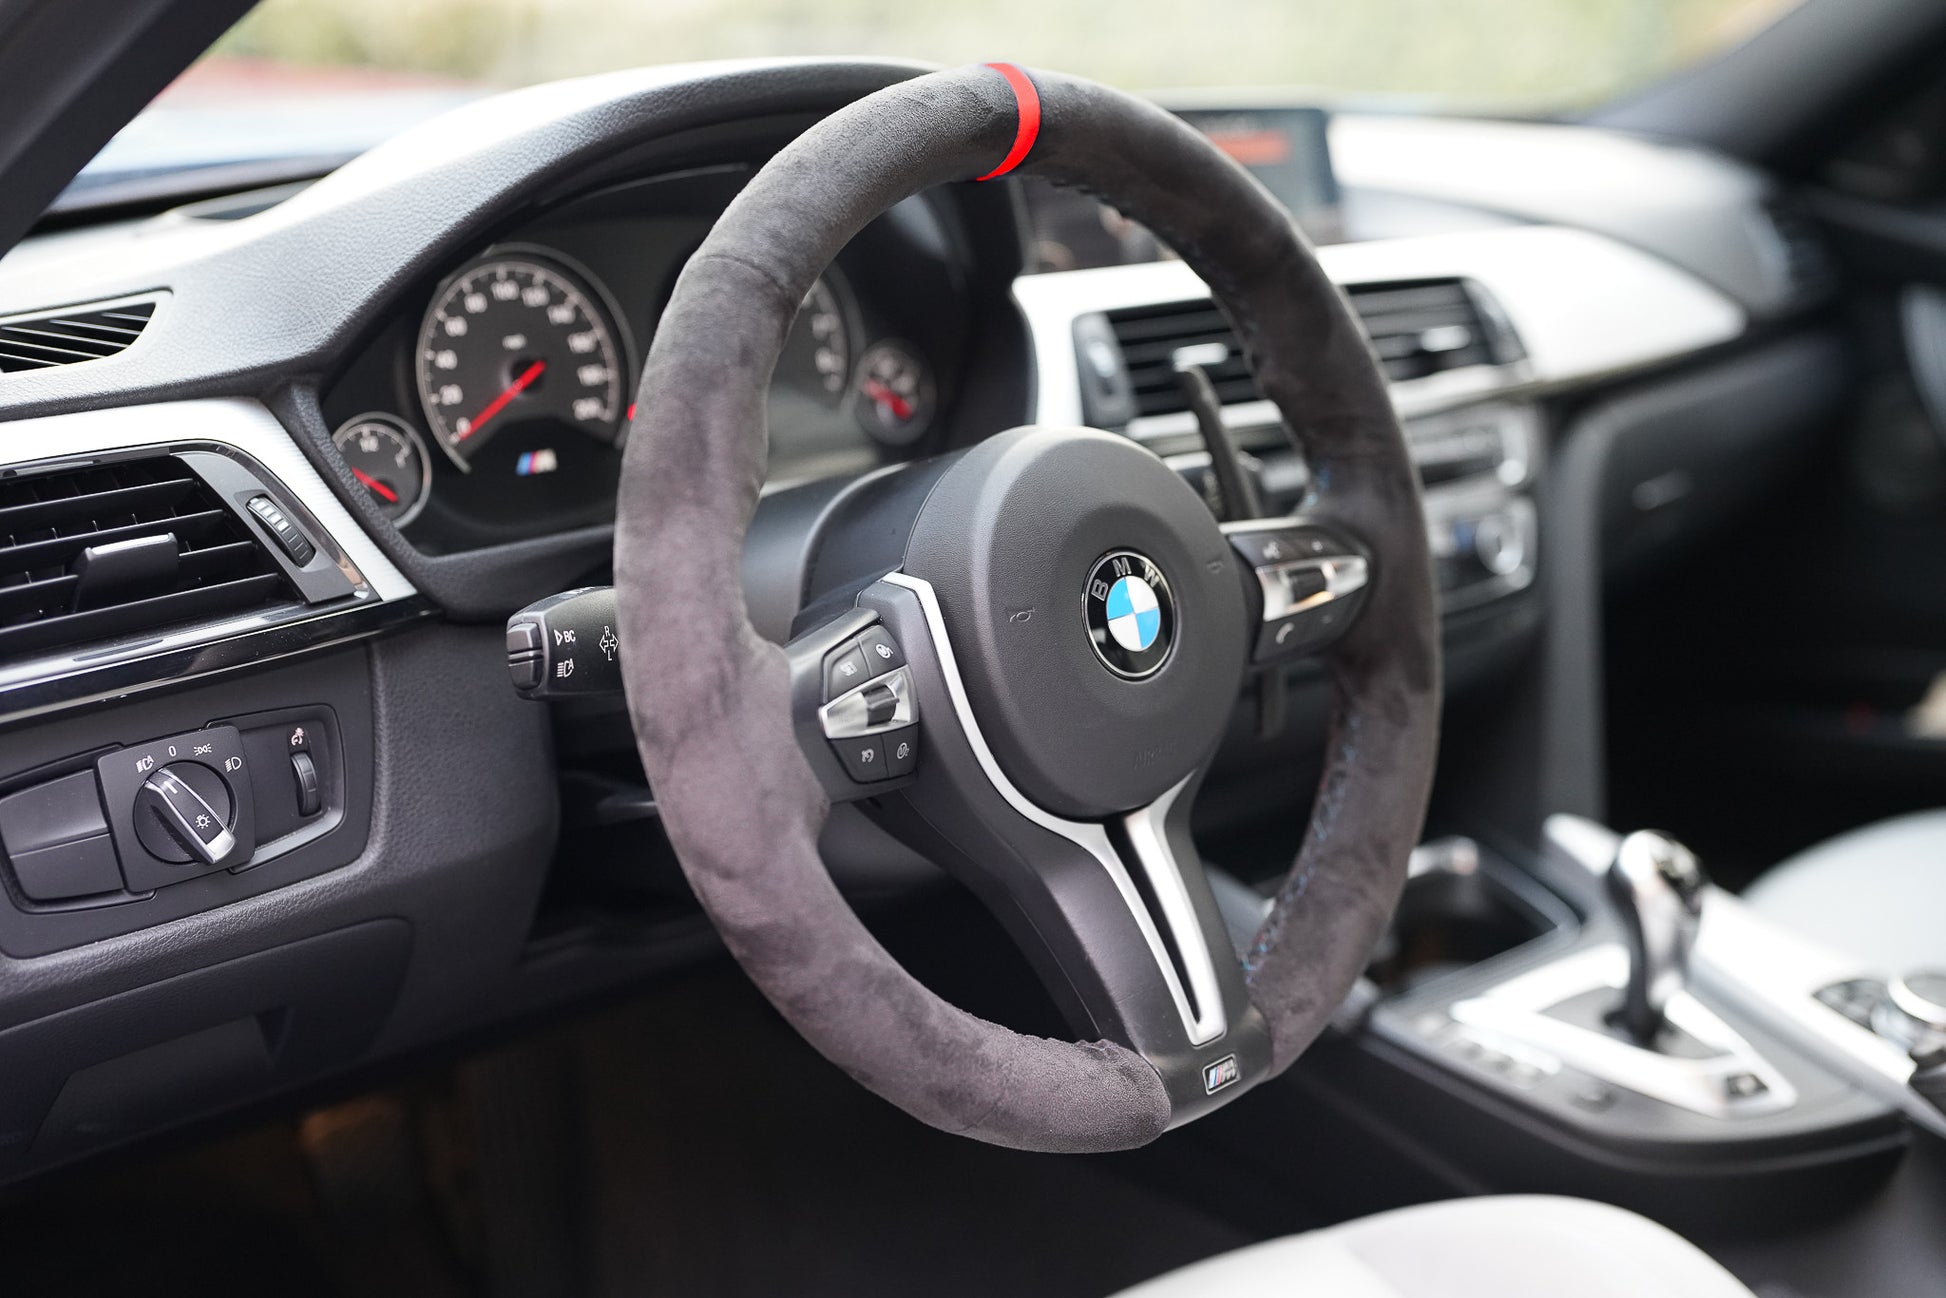 BMW MSport steering with brand new Alcantara wrap, Car Accessories